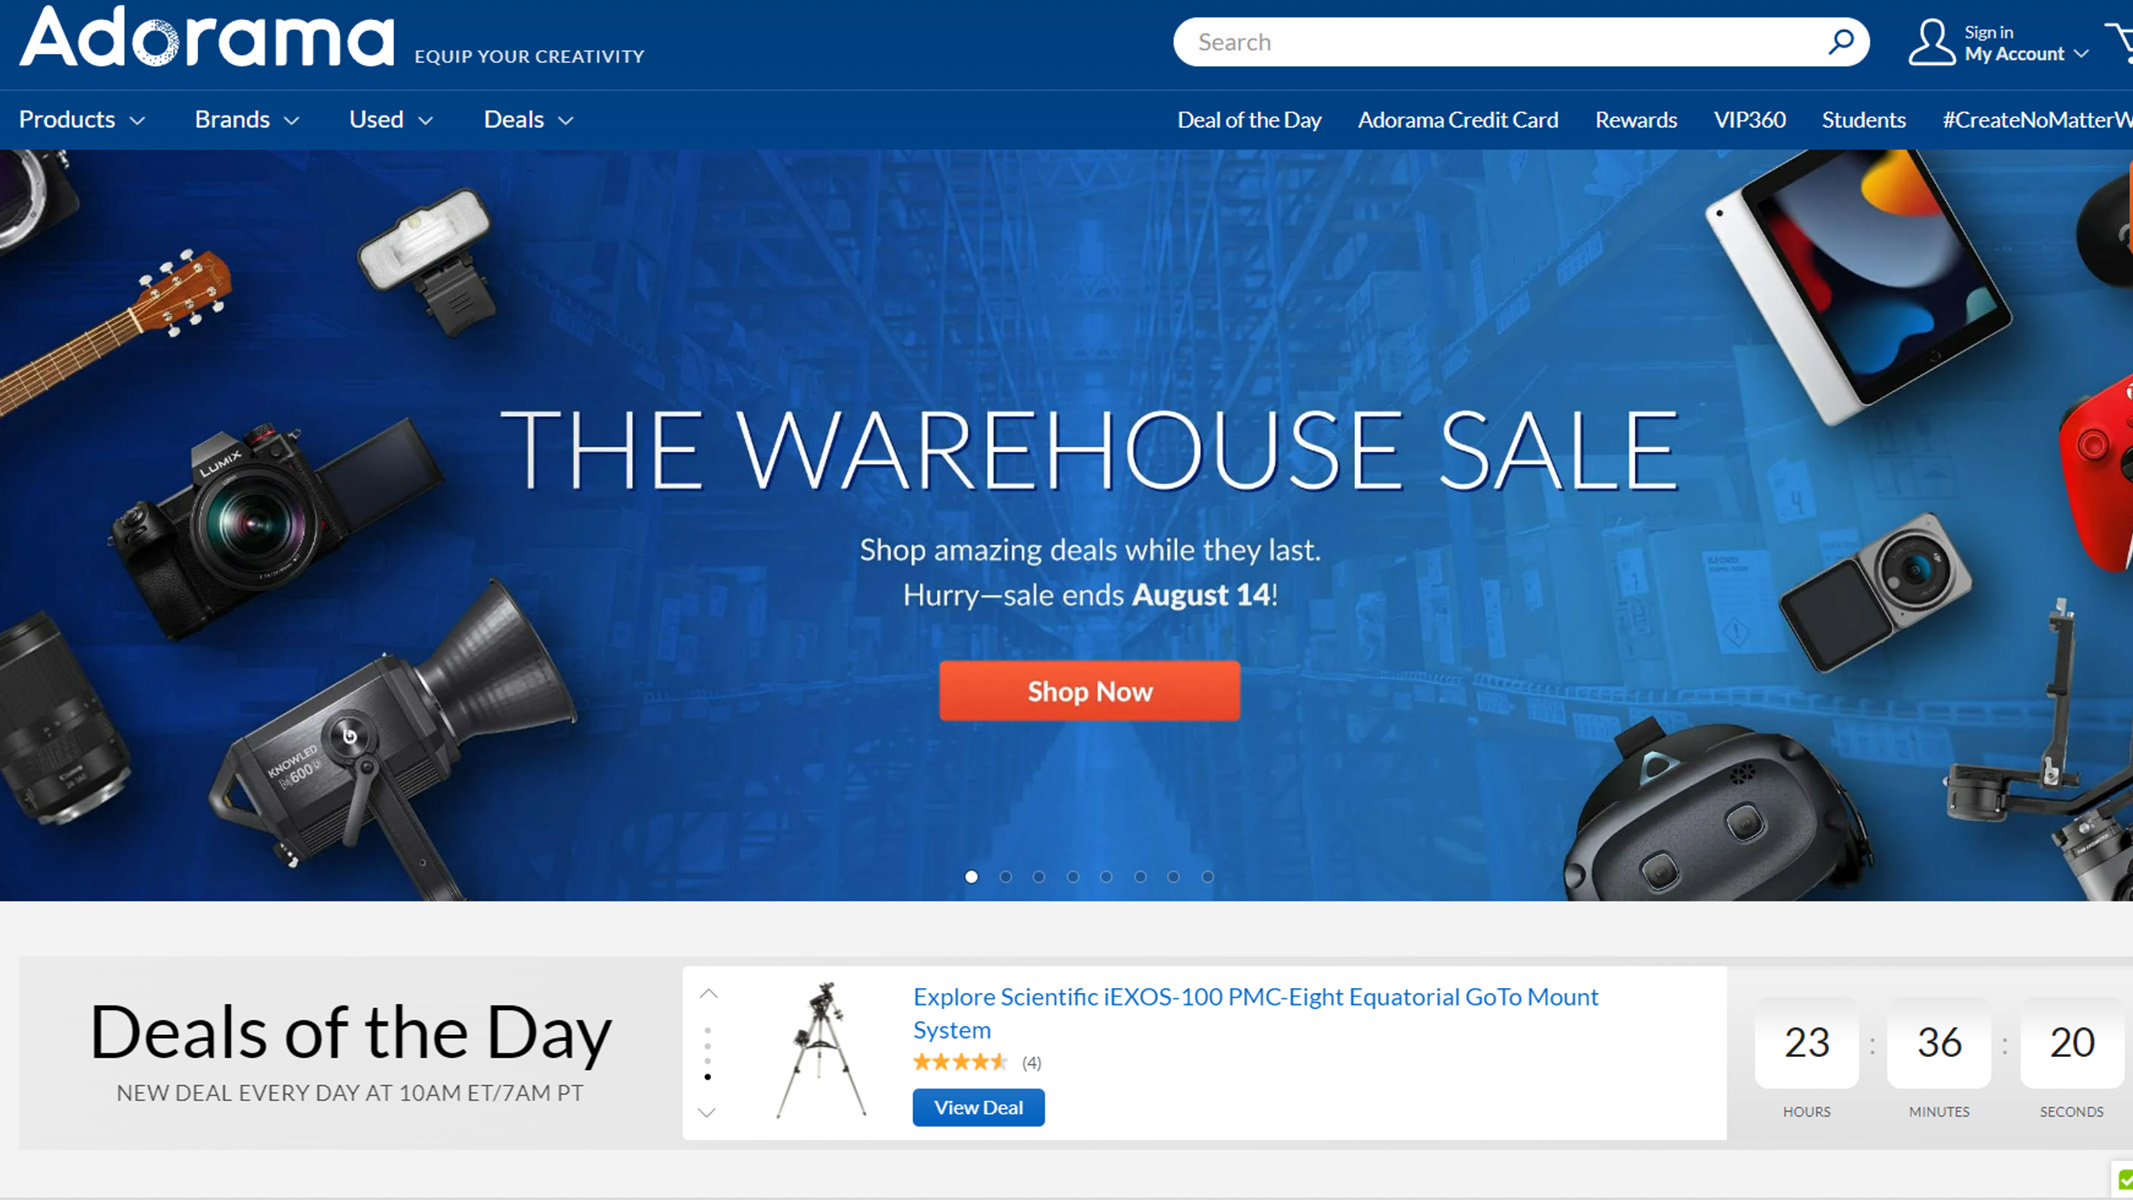 A screenshot of the Adorama homepackge showing a warehouse sale